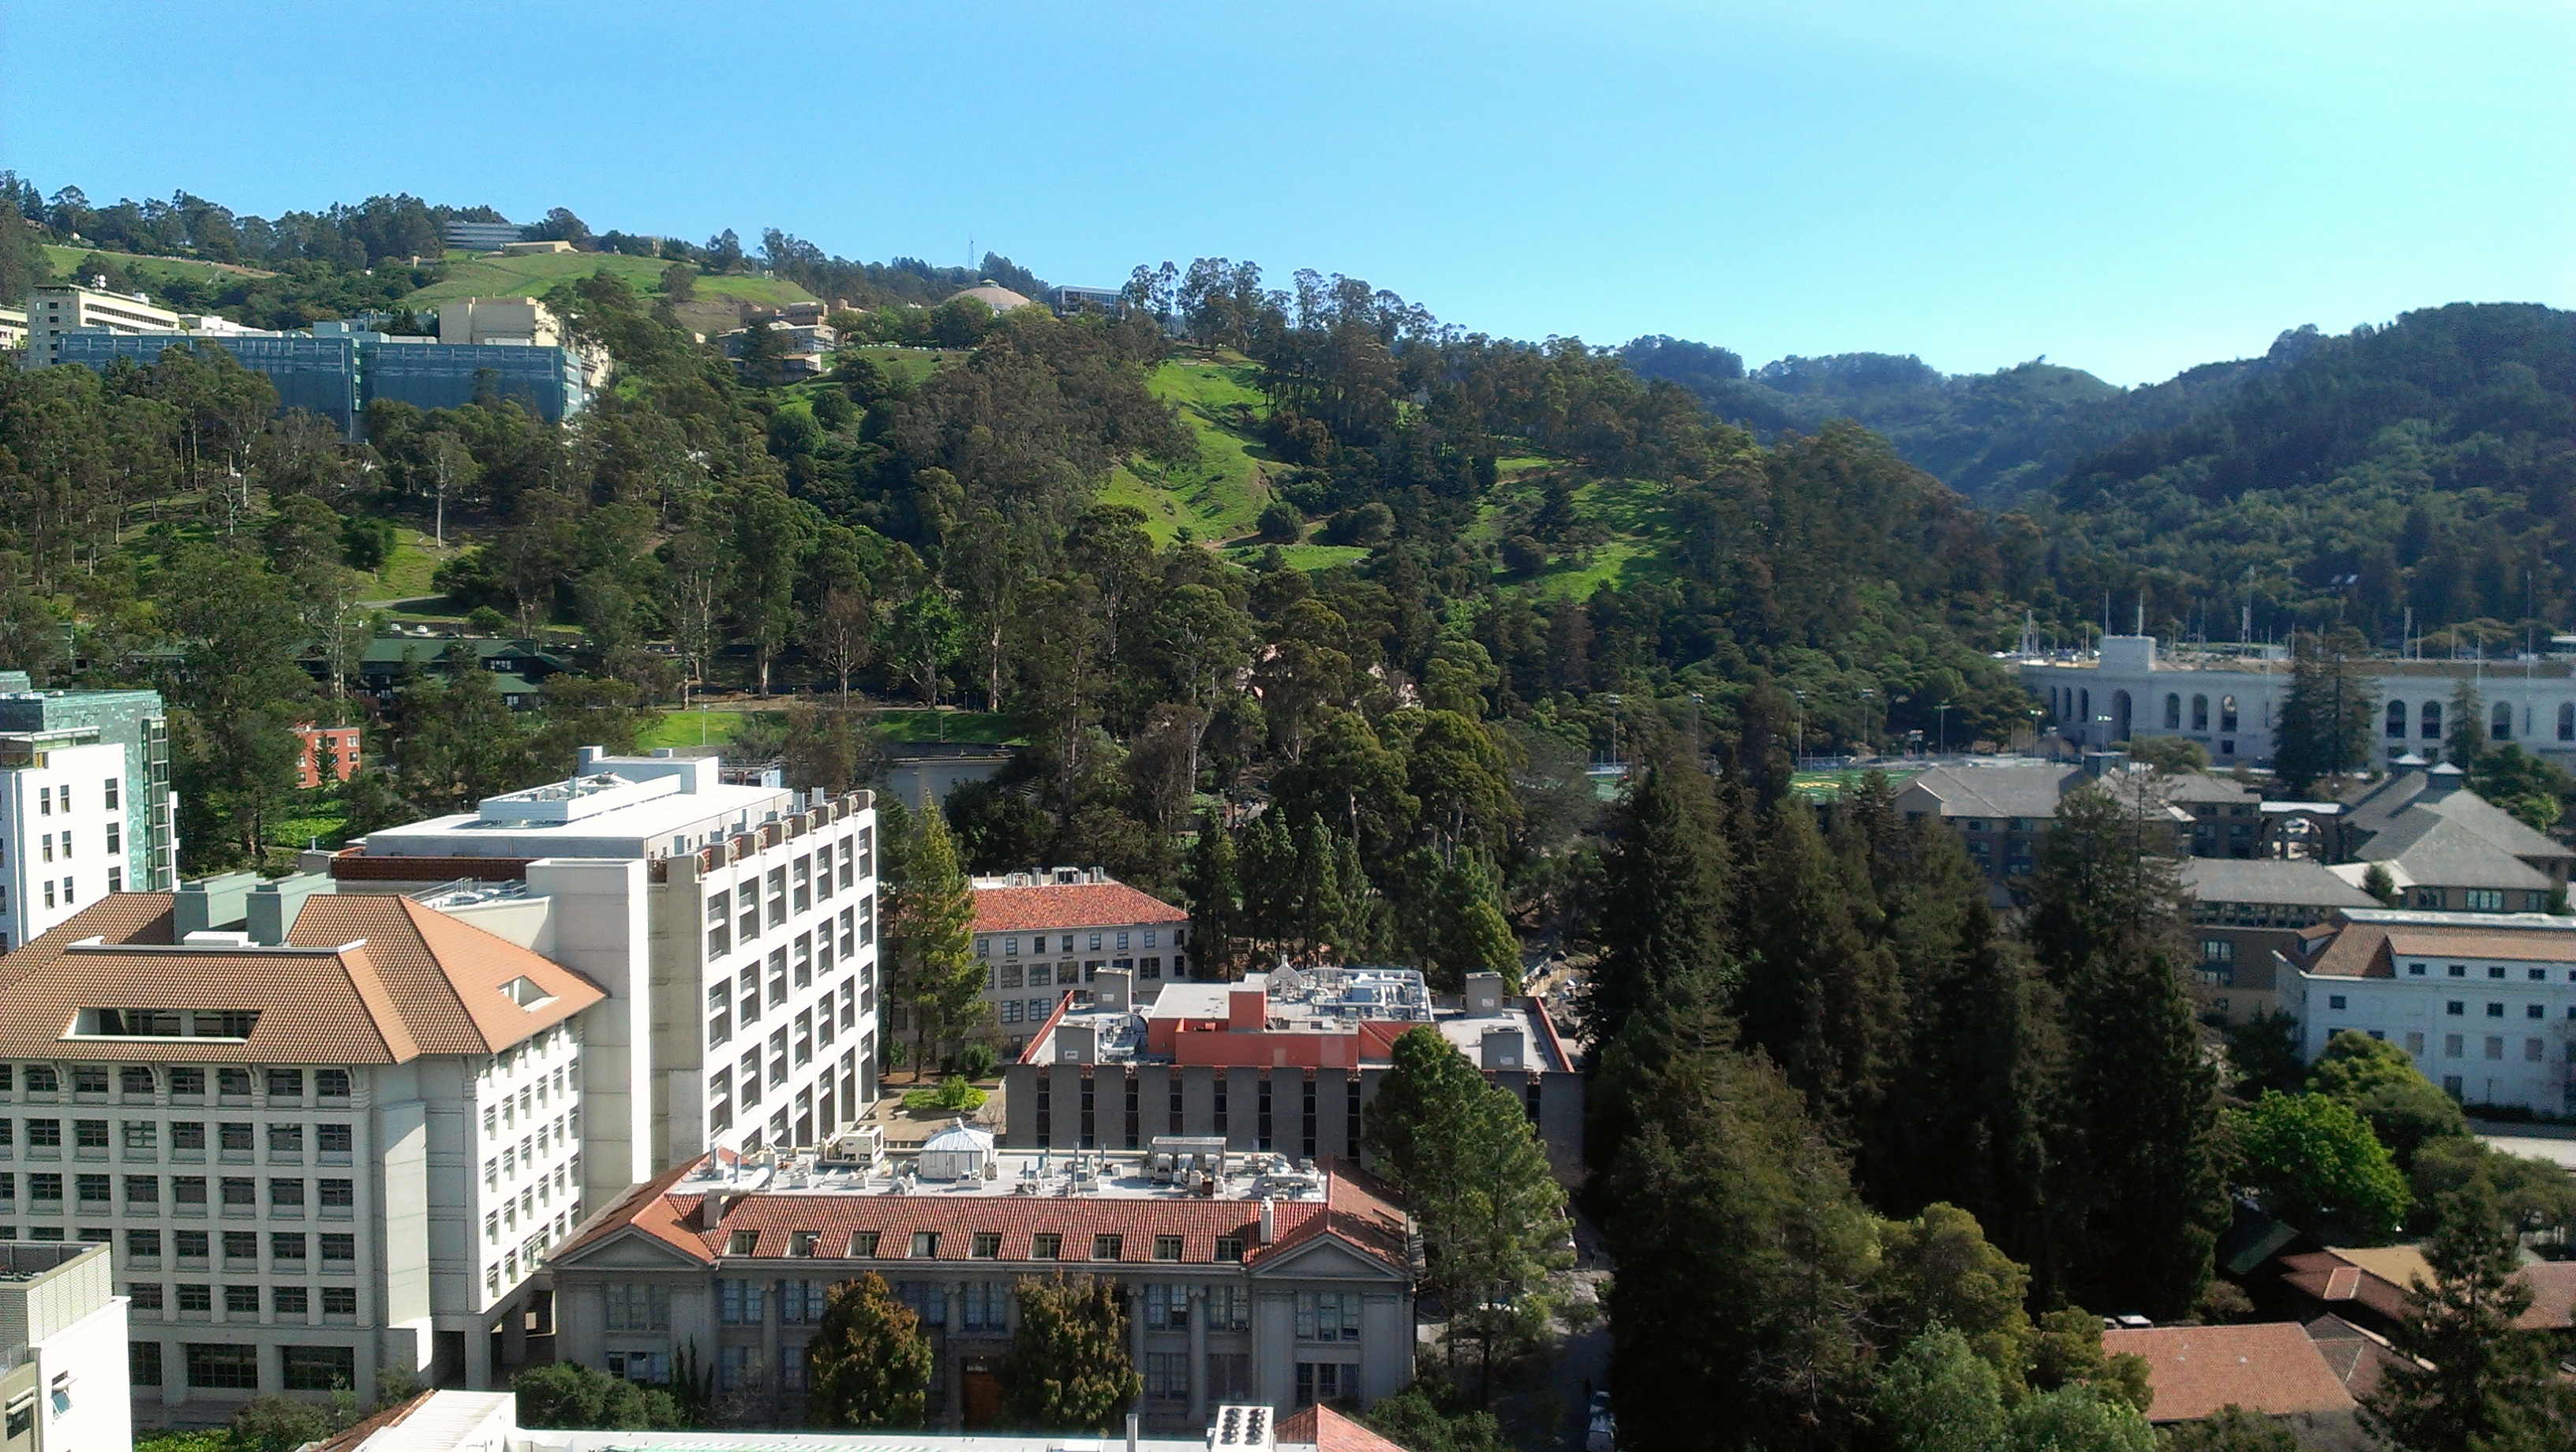 UC Berkeley College of Chemistry - Wikipedia